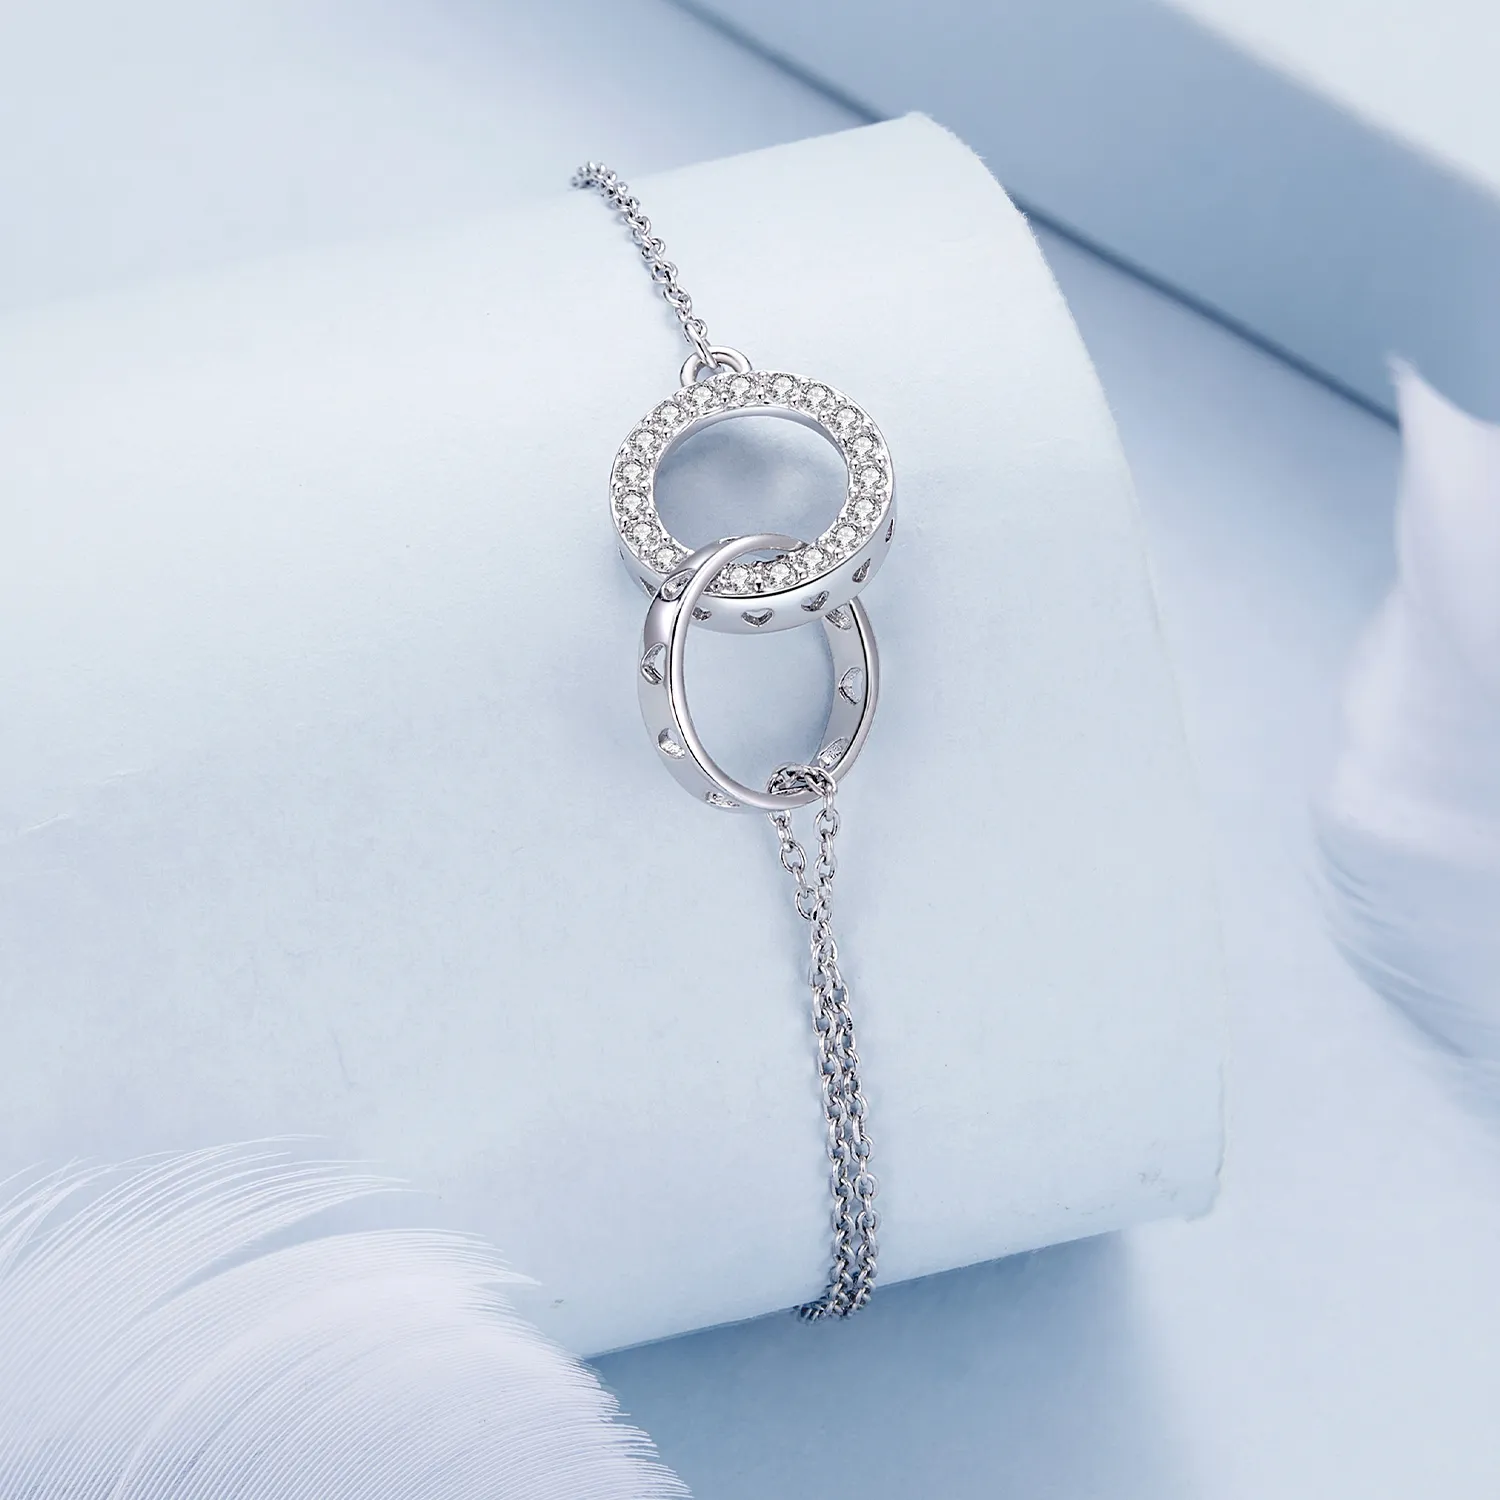 Pandora Style Double Chain Bracelet - BSB151